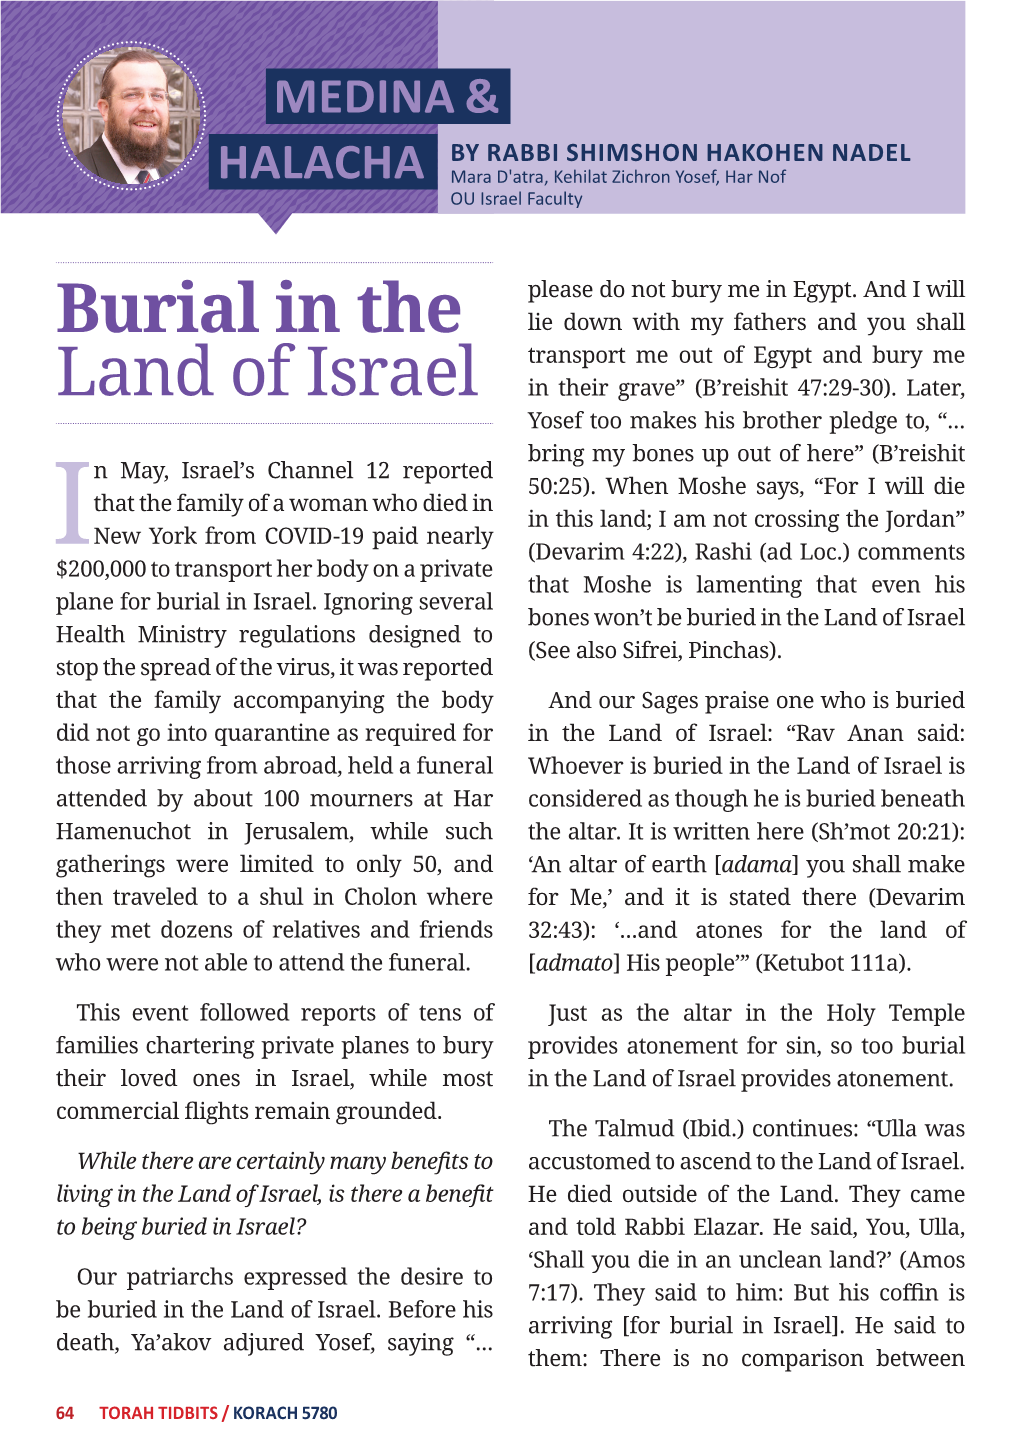 Burial in the Land of Israel: Chassidic Authorities Ruled Against Burial “Rebbi Bar Kirya and Rabbi Lazar Were in Israel